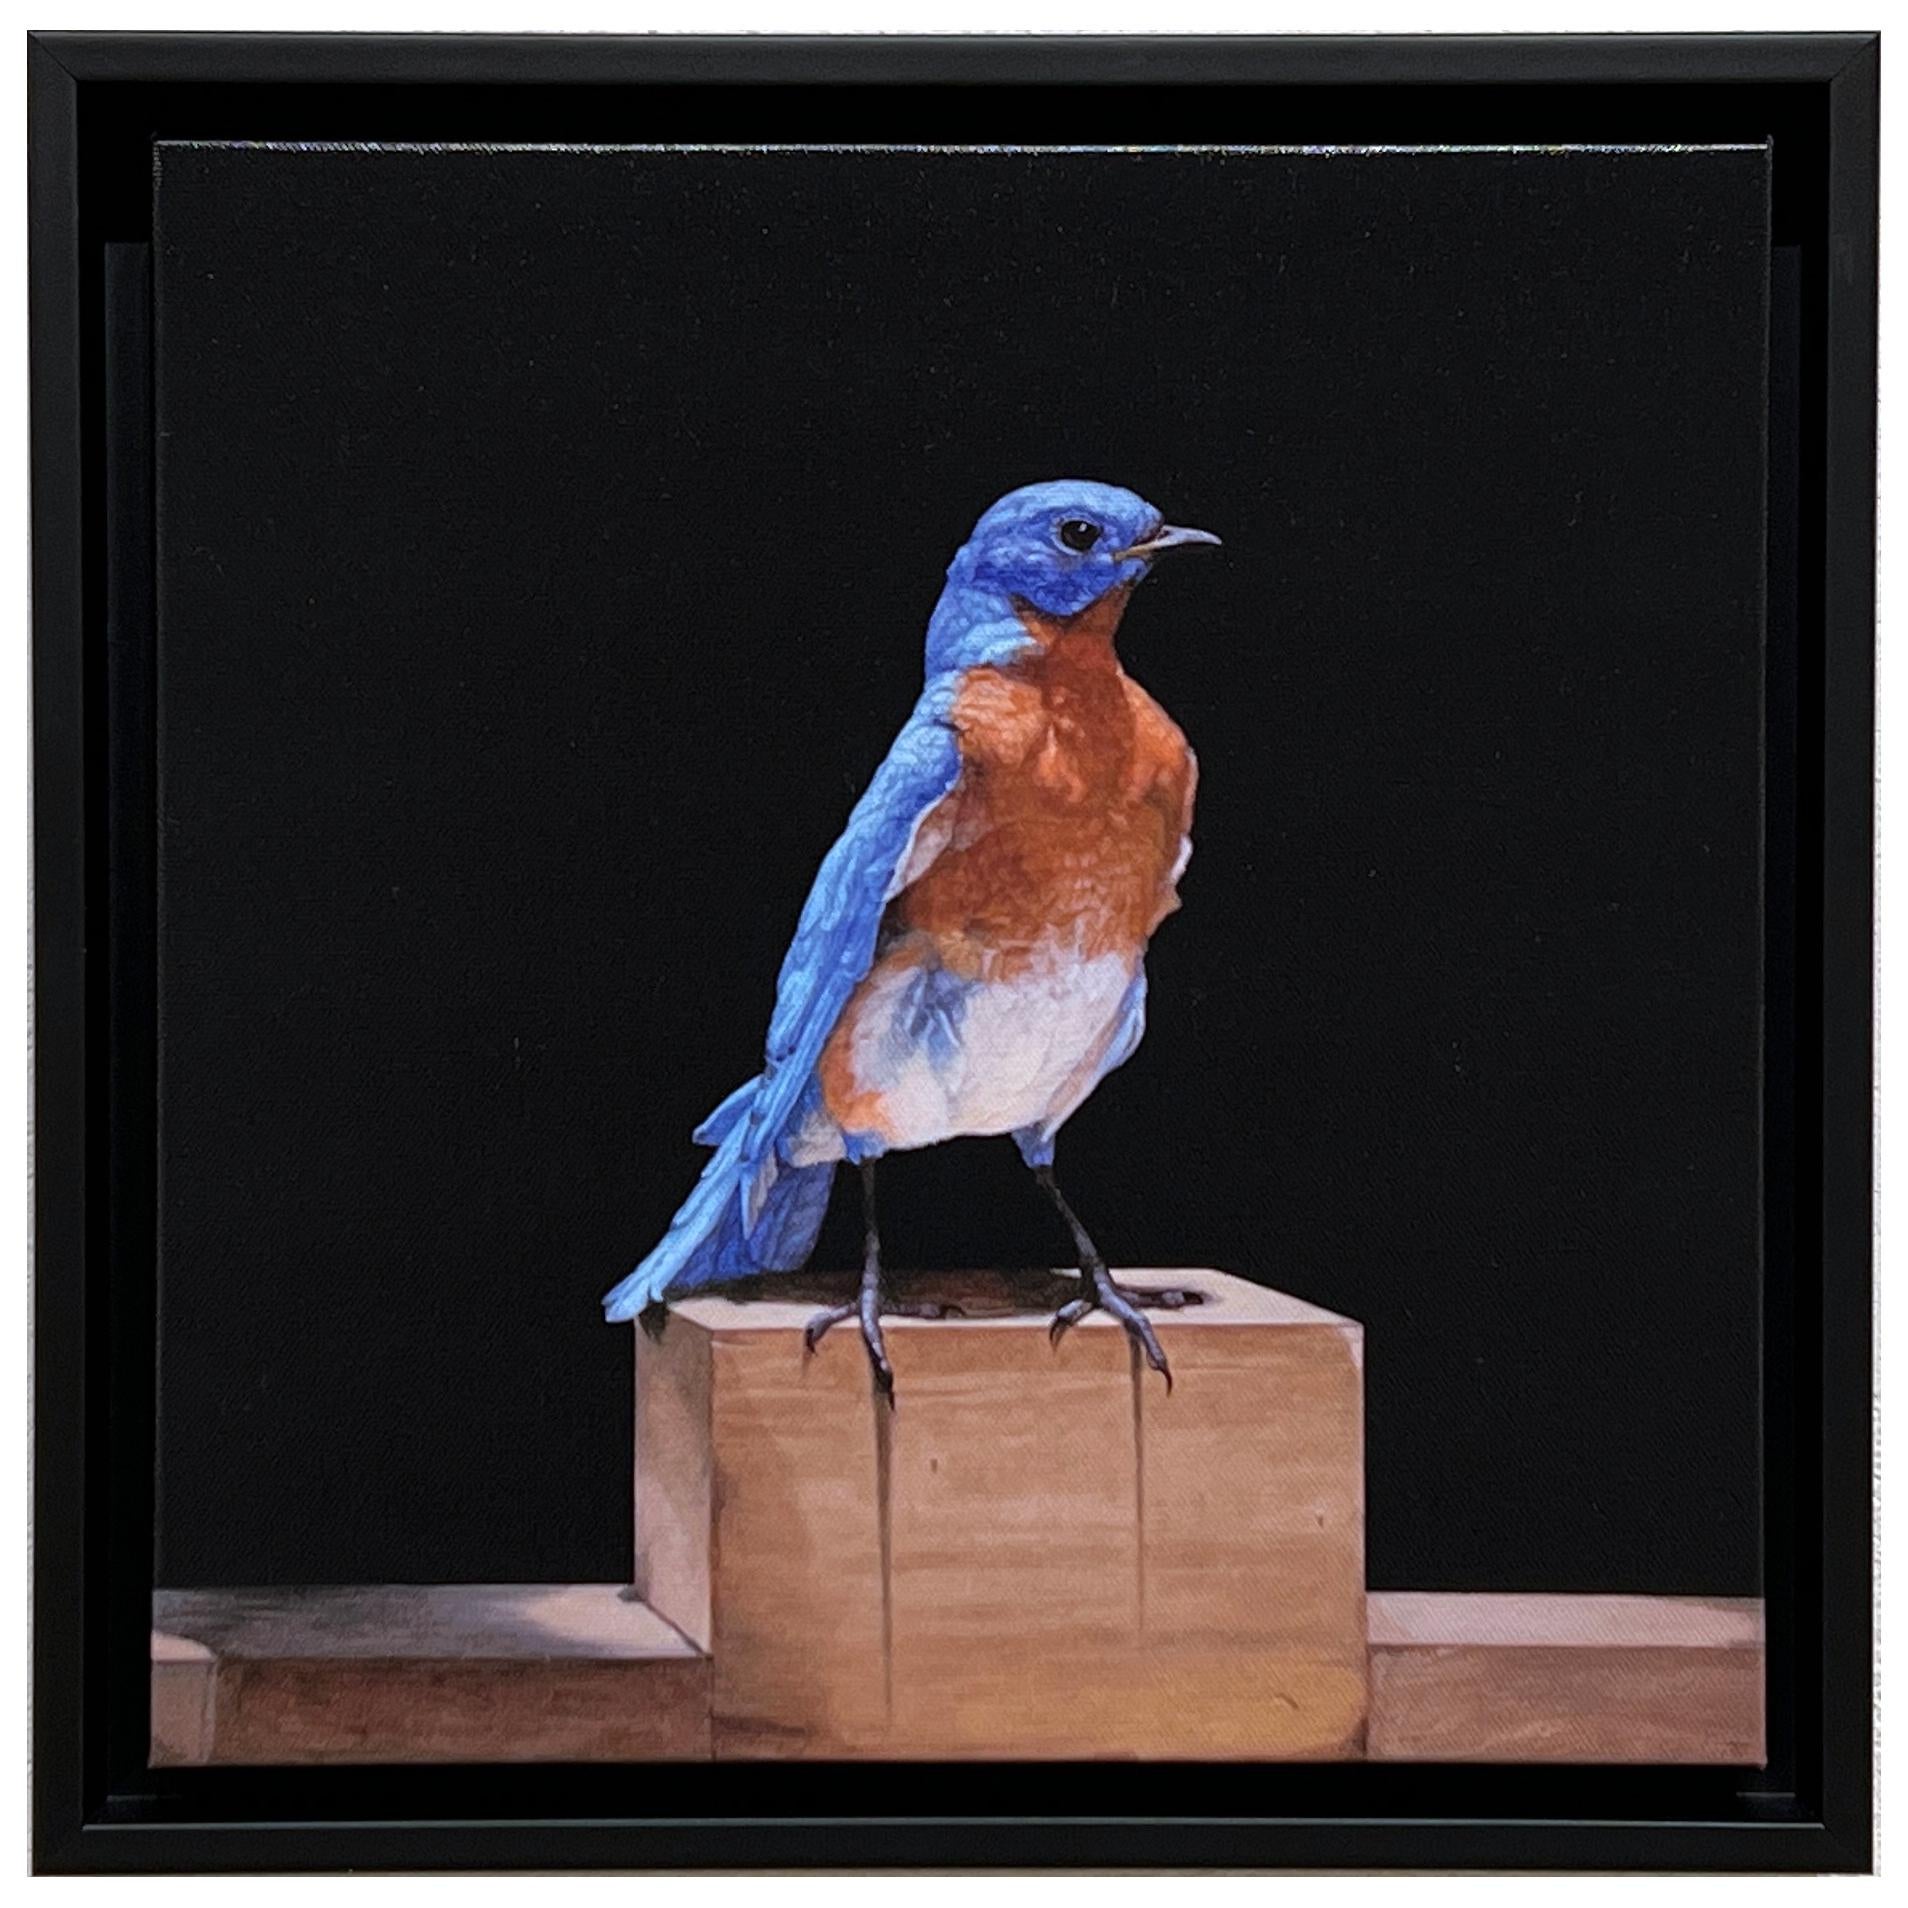 EASTERN BLUE BIRD - Contemporary / photorealism / animal print